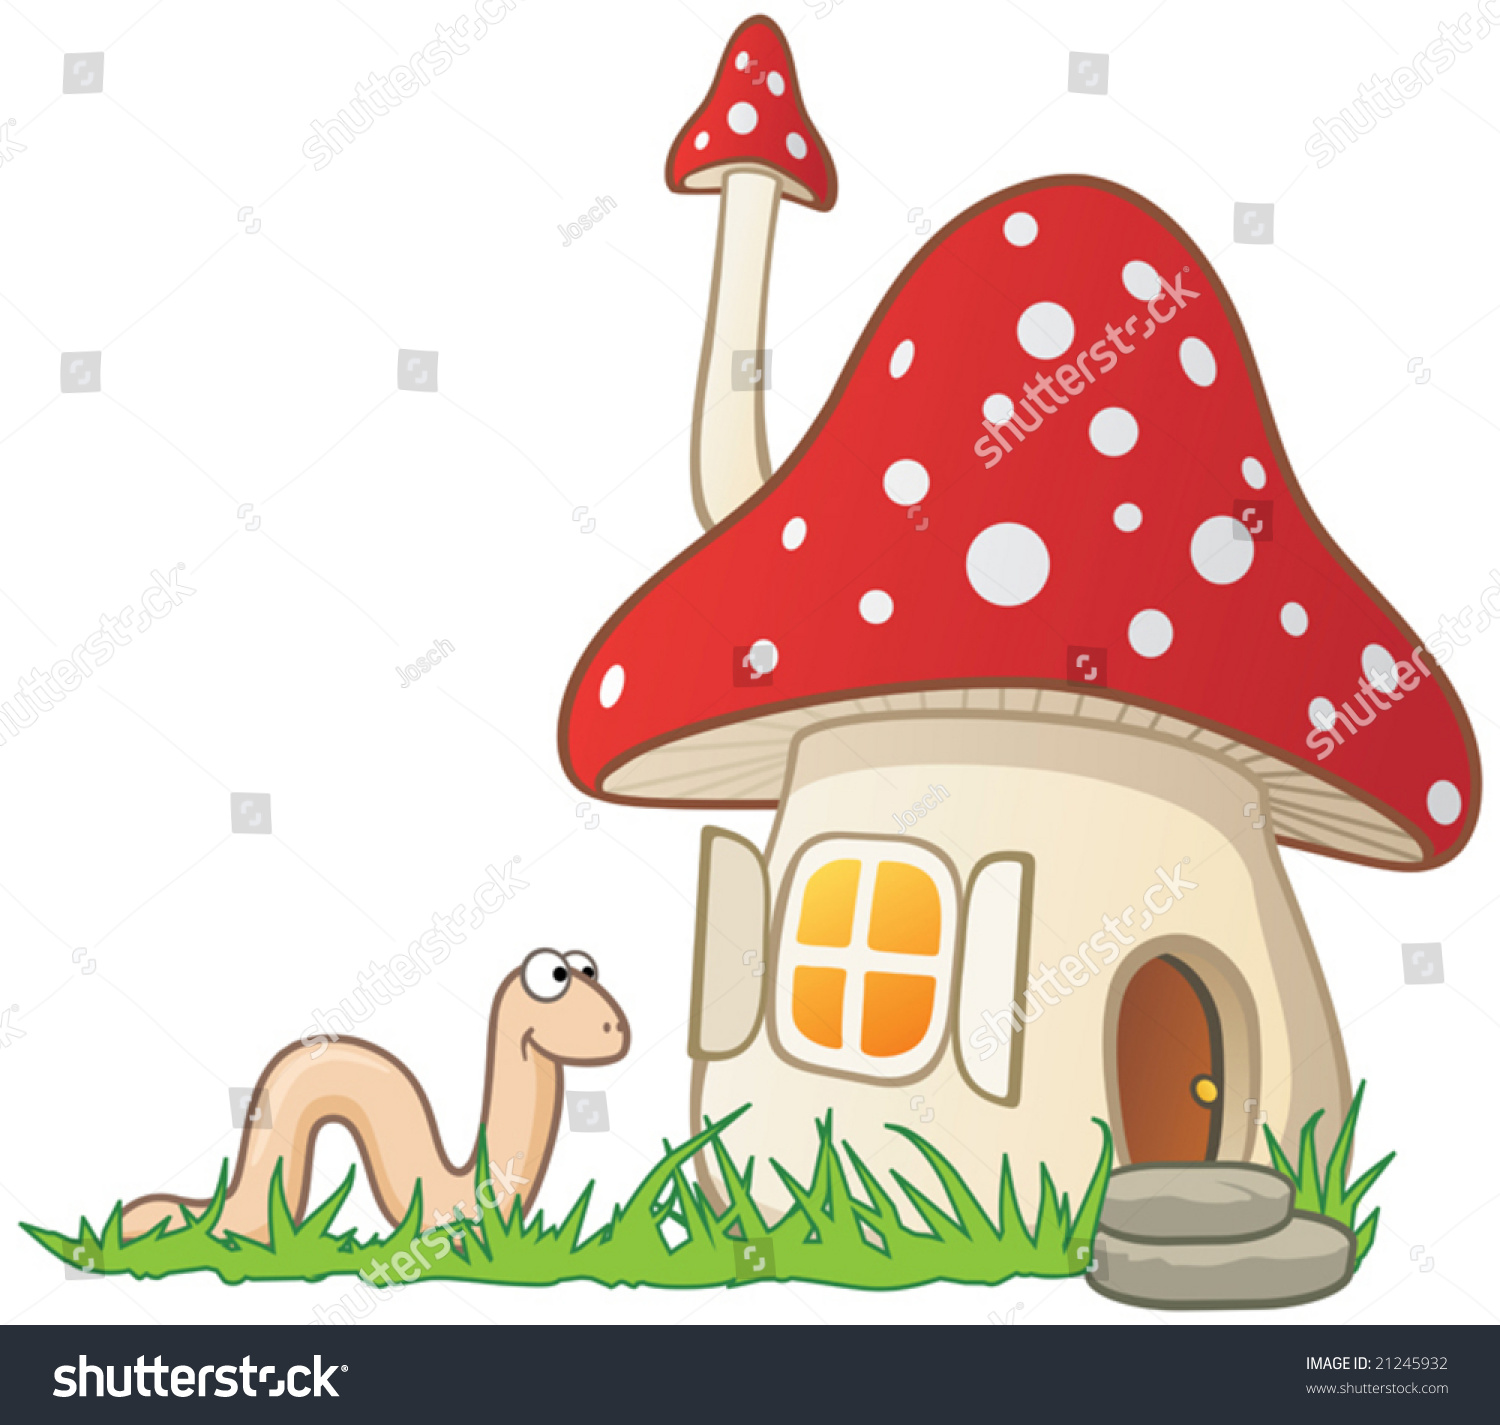 mushroom house clipart - photo #22